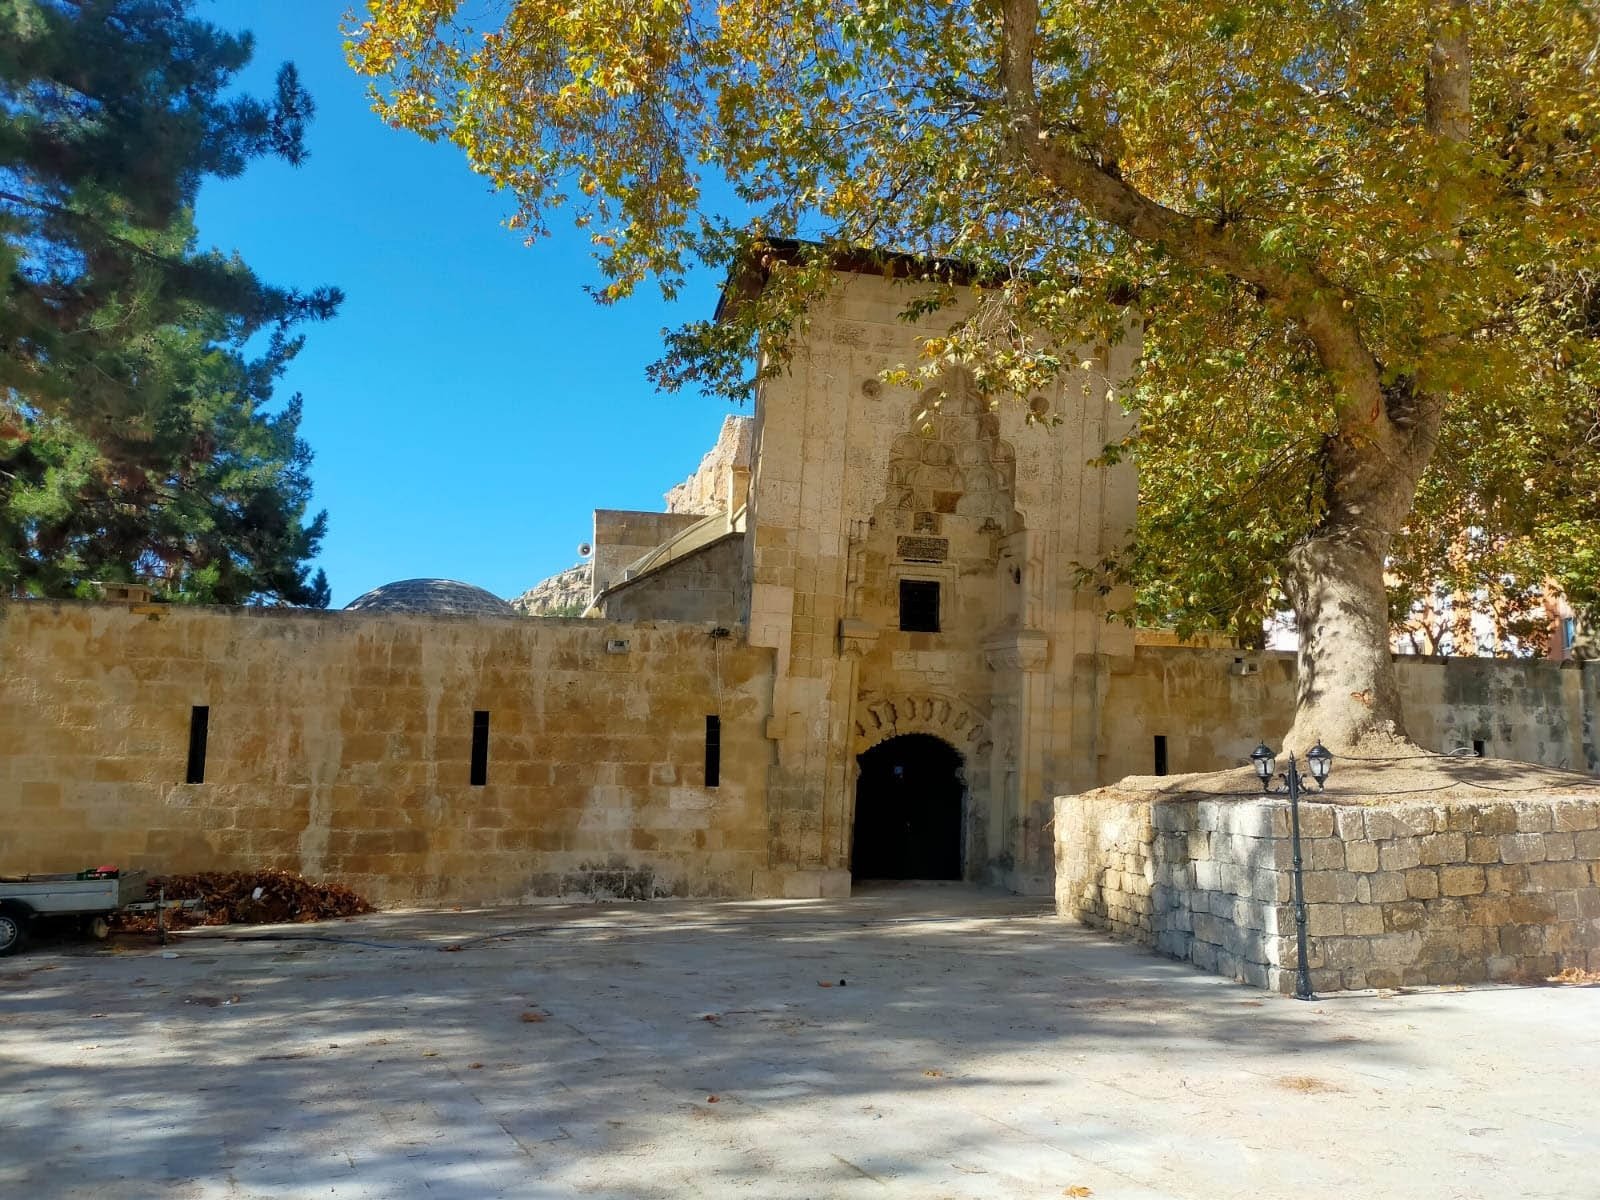 The entrance of the Tol Madrassa built in 1339 in Ermenek province, Karaman, Turkey, Nov. 16, 2021. (DHA Photo)